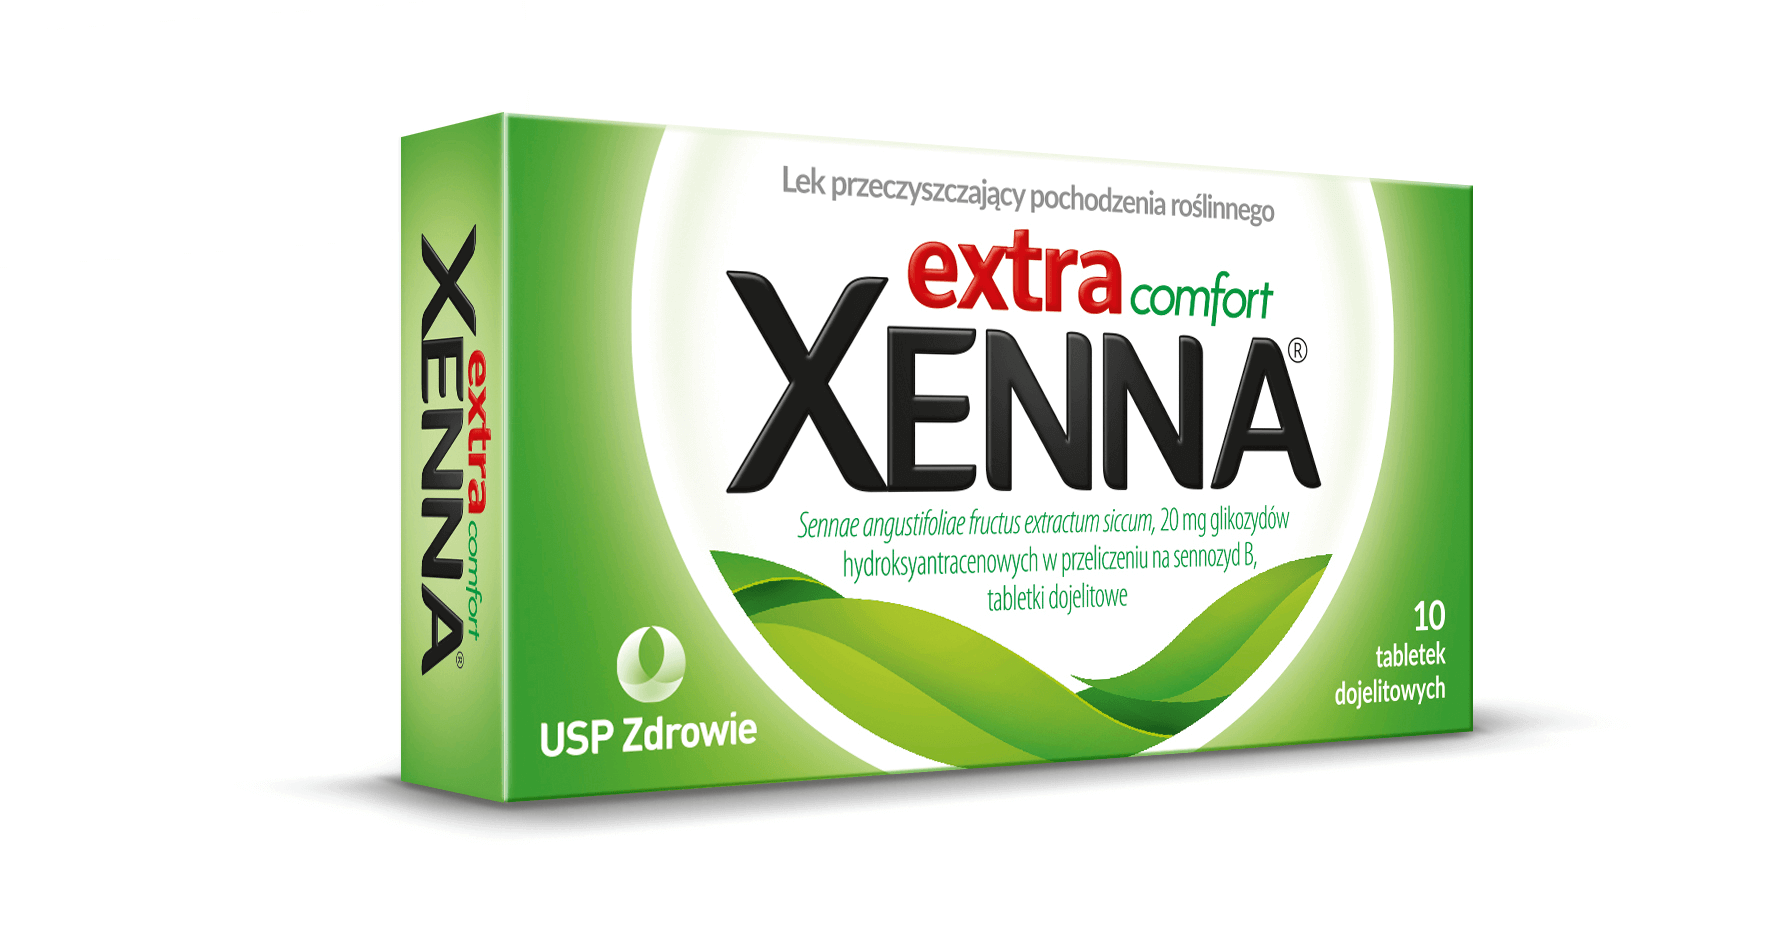 XENNA extra comfort 10